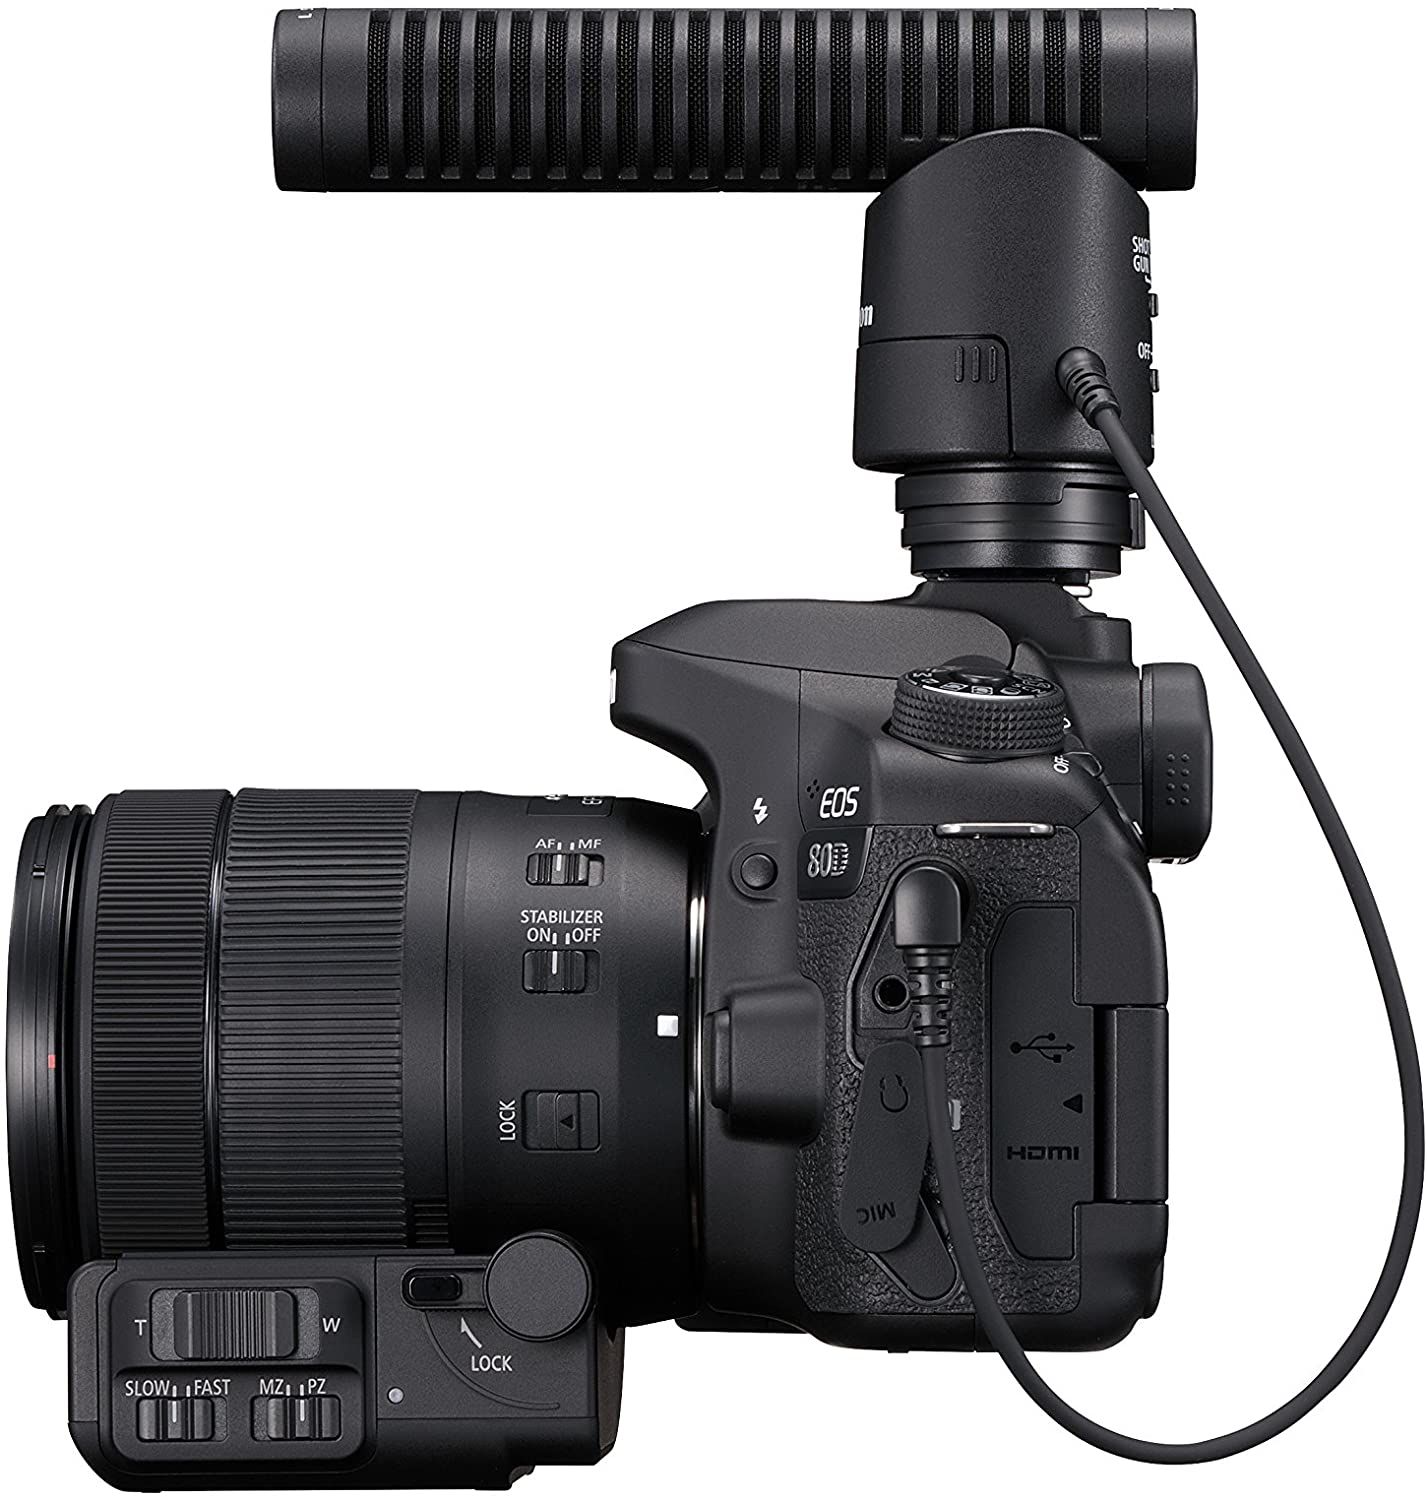 Canon DM-E1 side